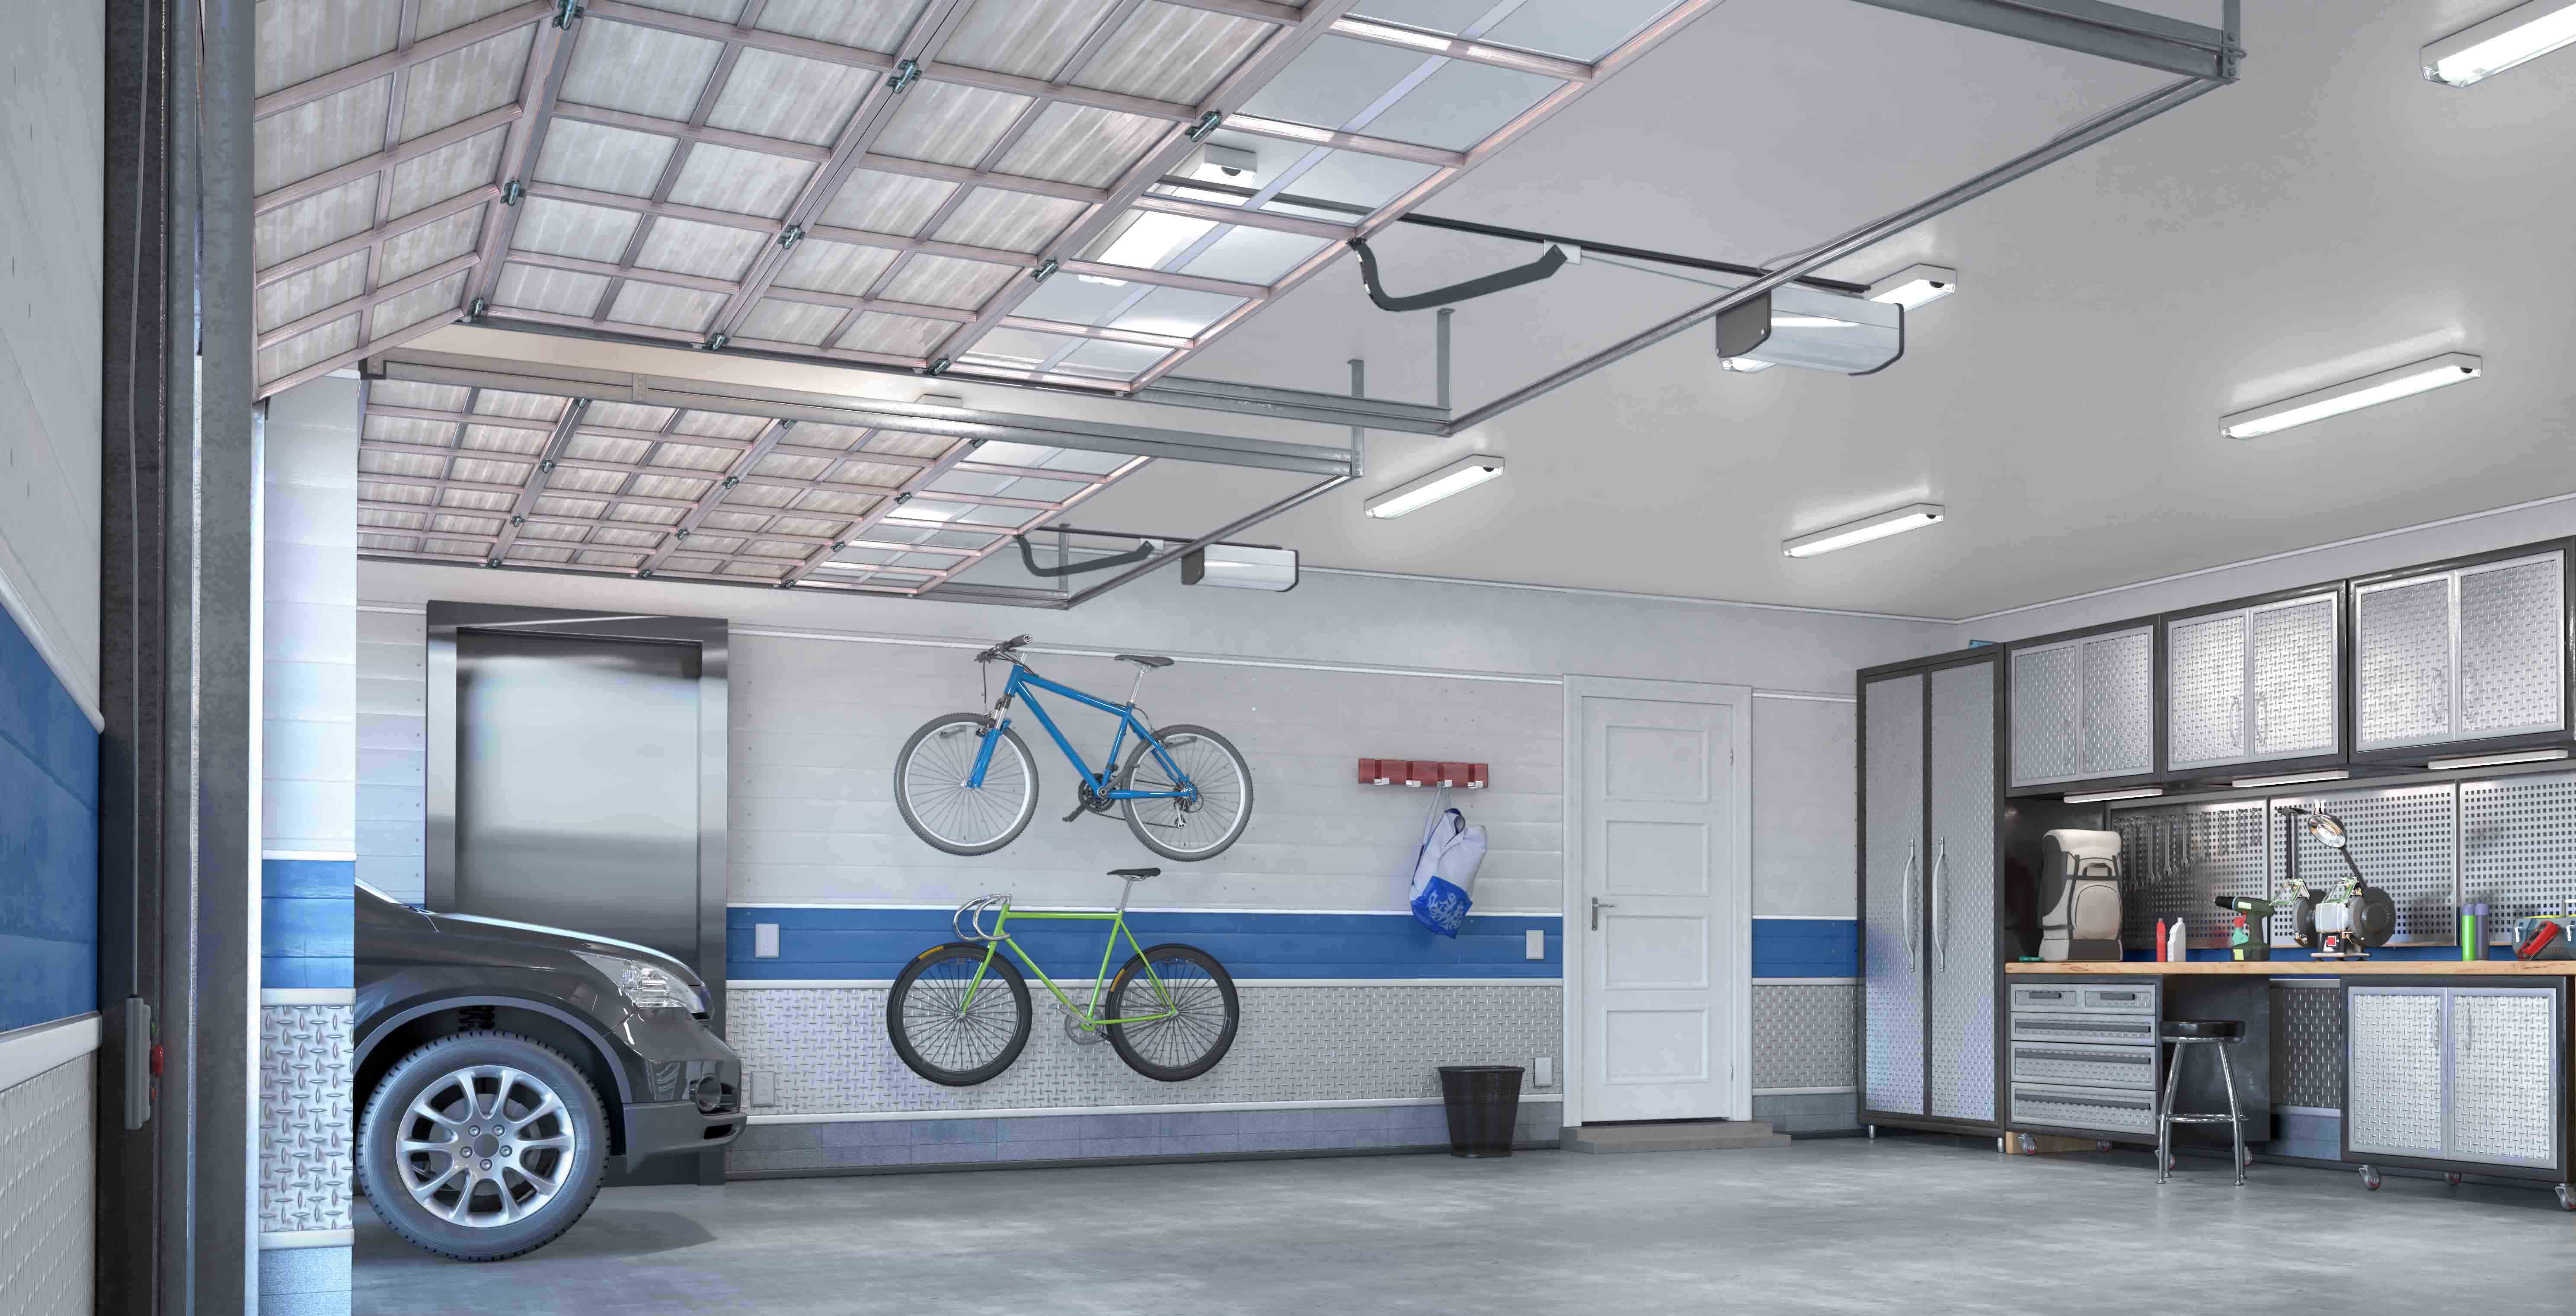 Garage Lighting Ideas Infographic: See the Best Overhead Fixtures & LED Light Warehouse-Lighting.com